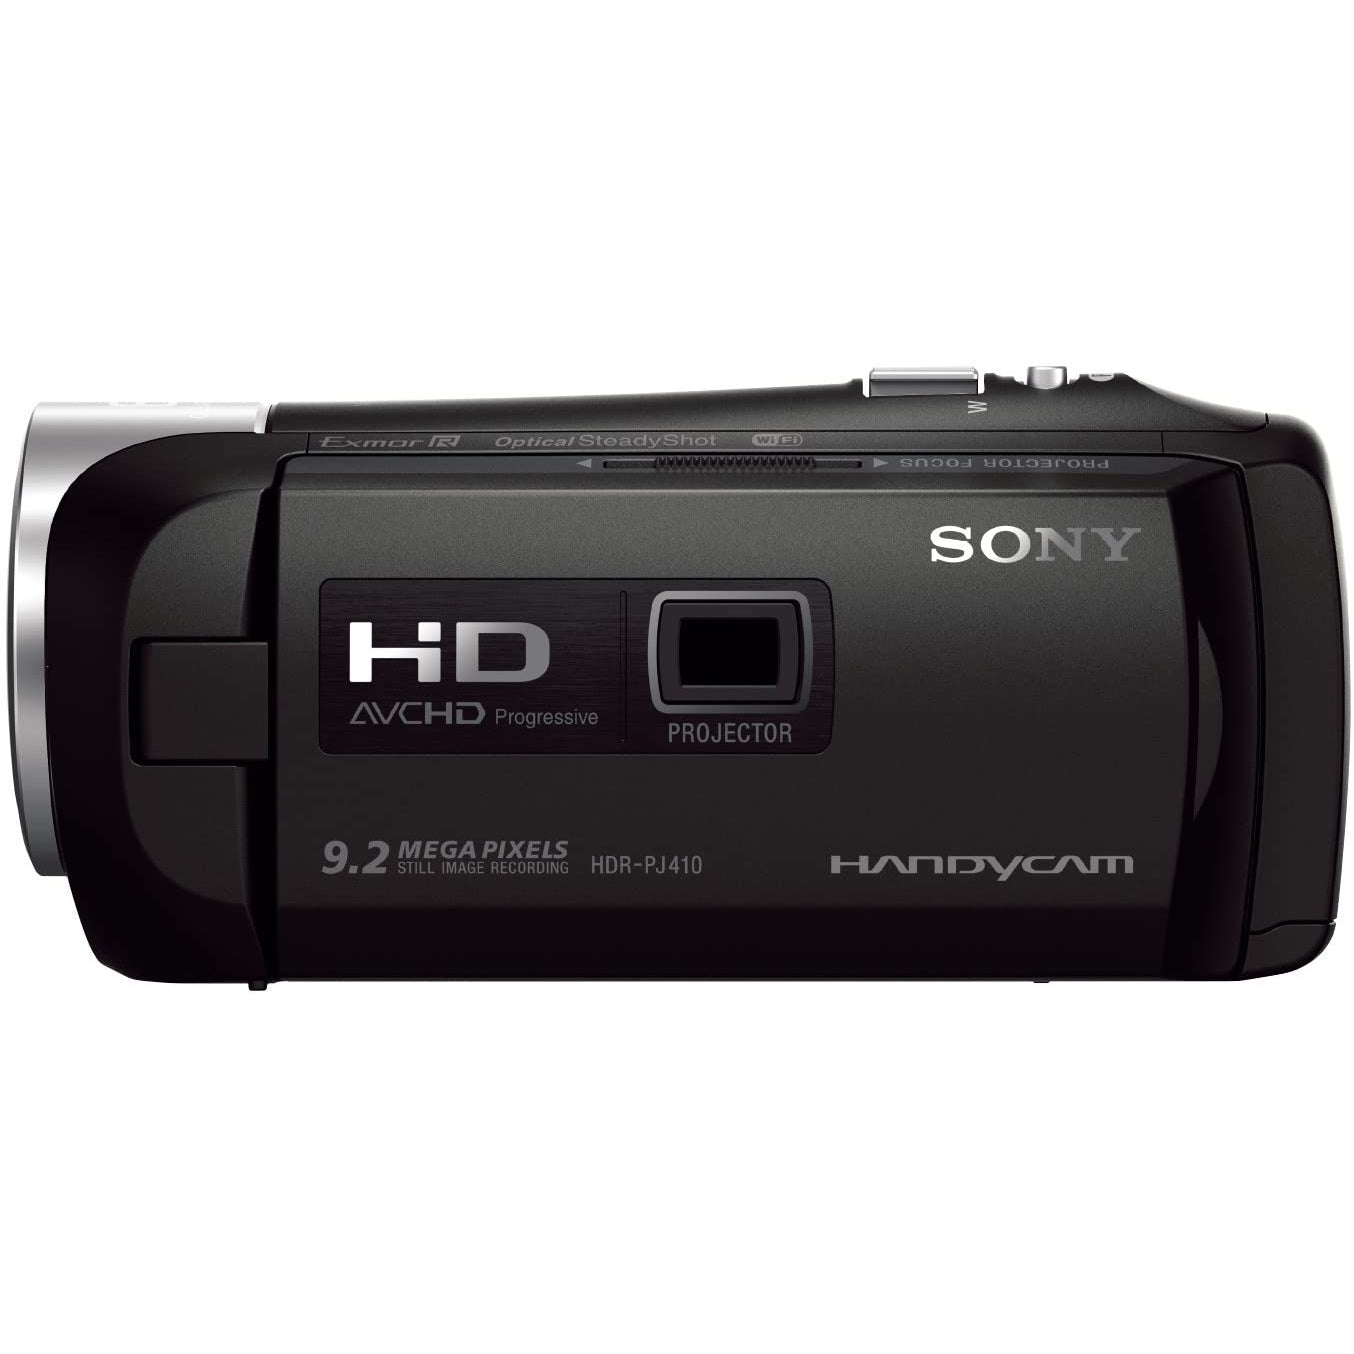 Sony HDR-PJ410 Full HD Camcorder, Black